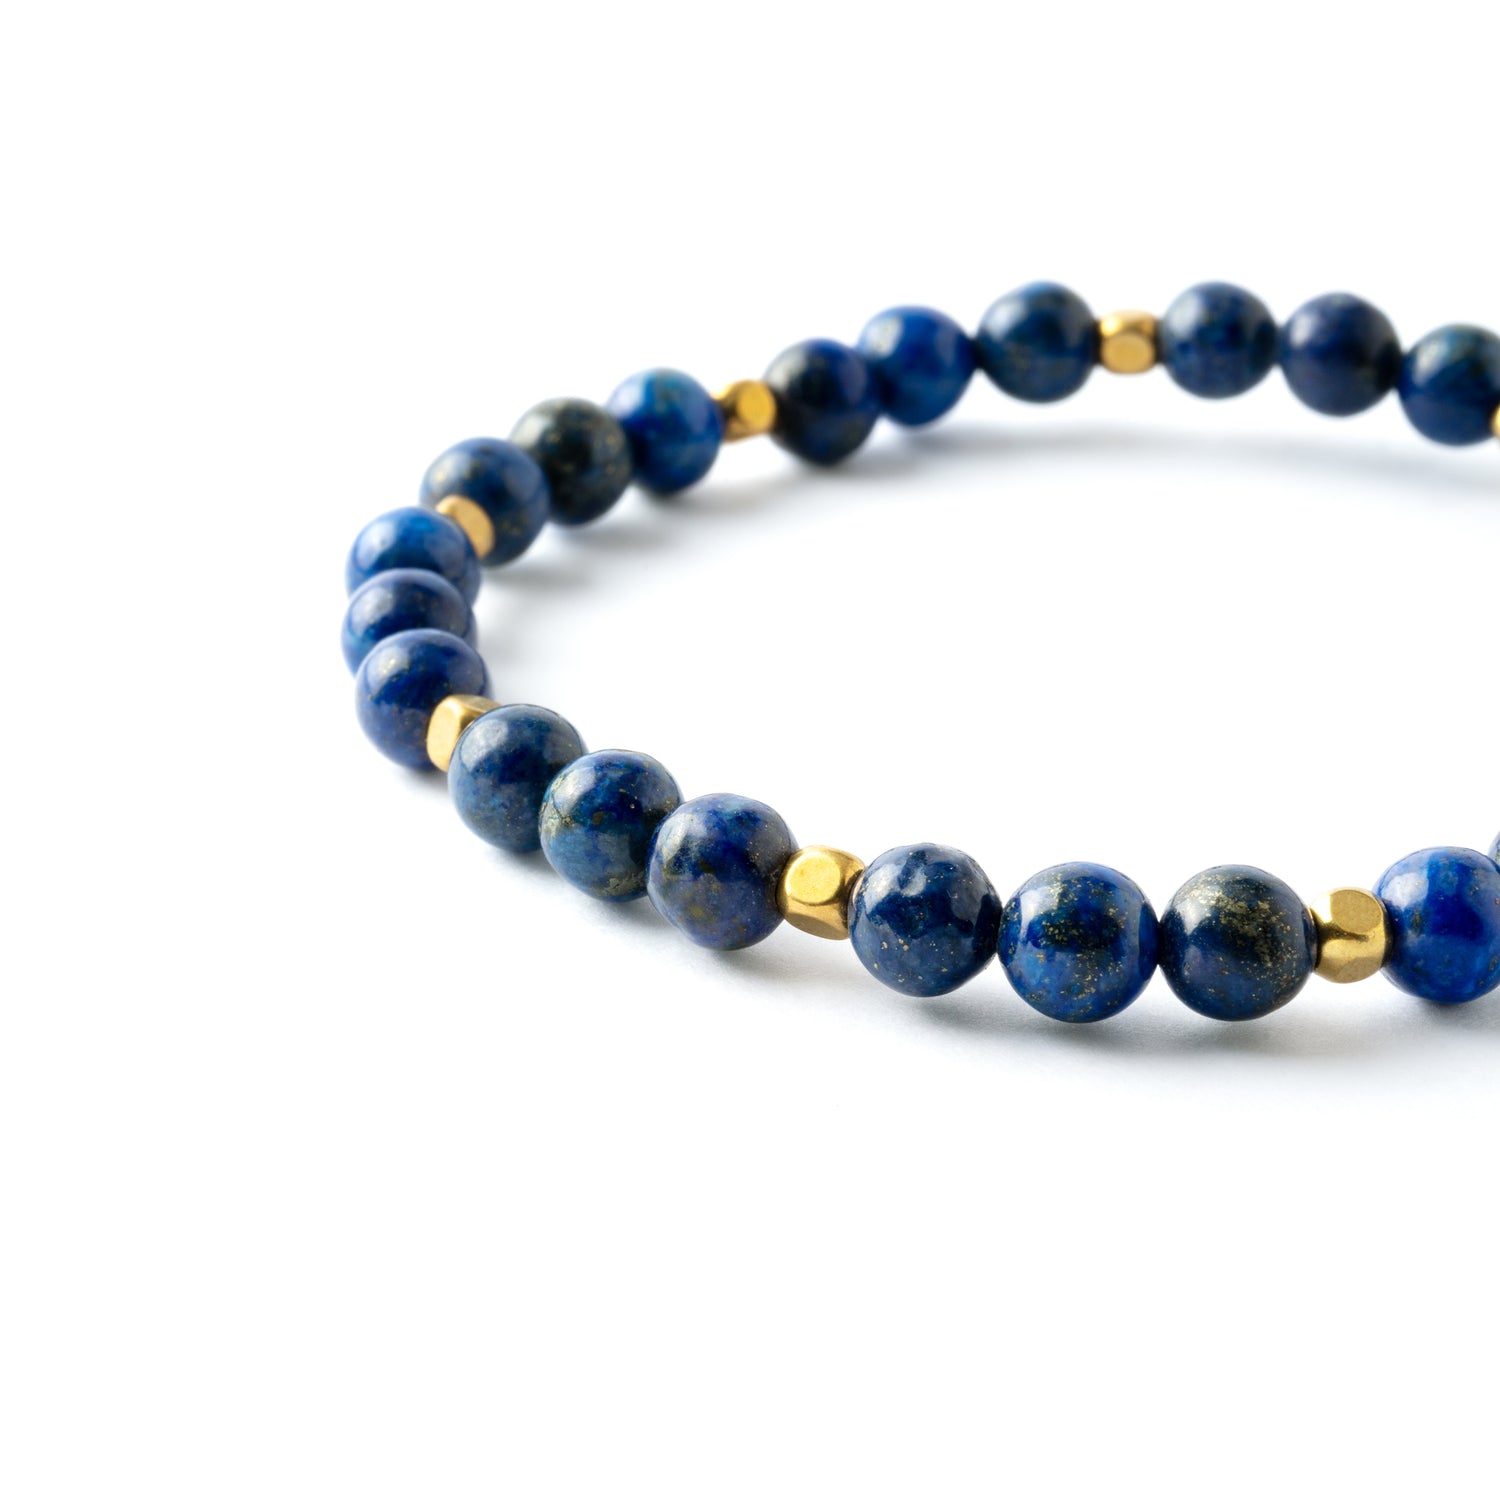 Lapis Lazuli beads bracelet with interlocking petite squared golden brass beads close up view